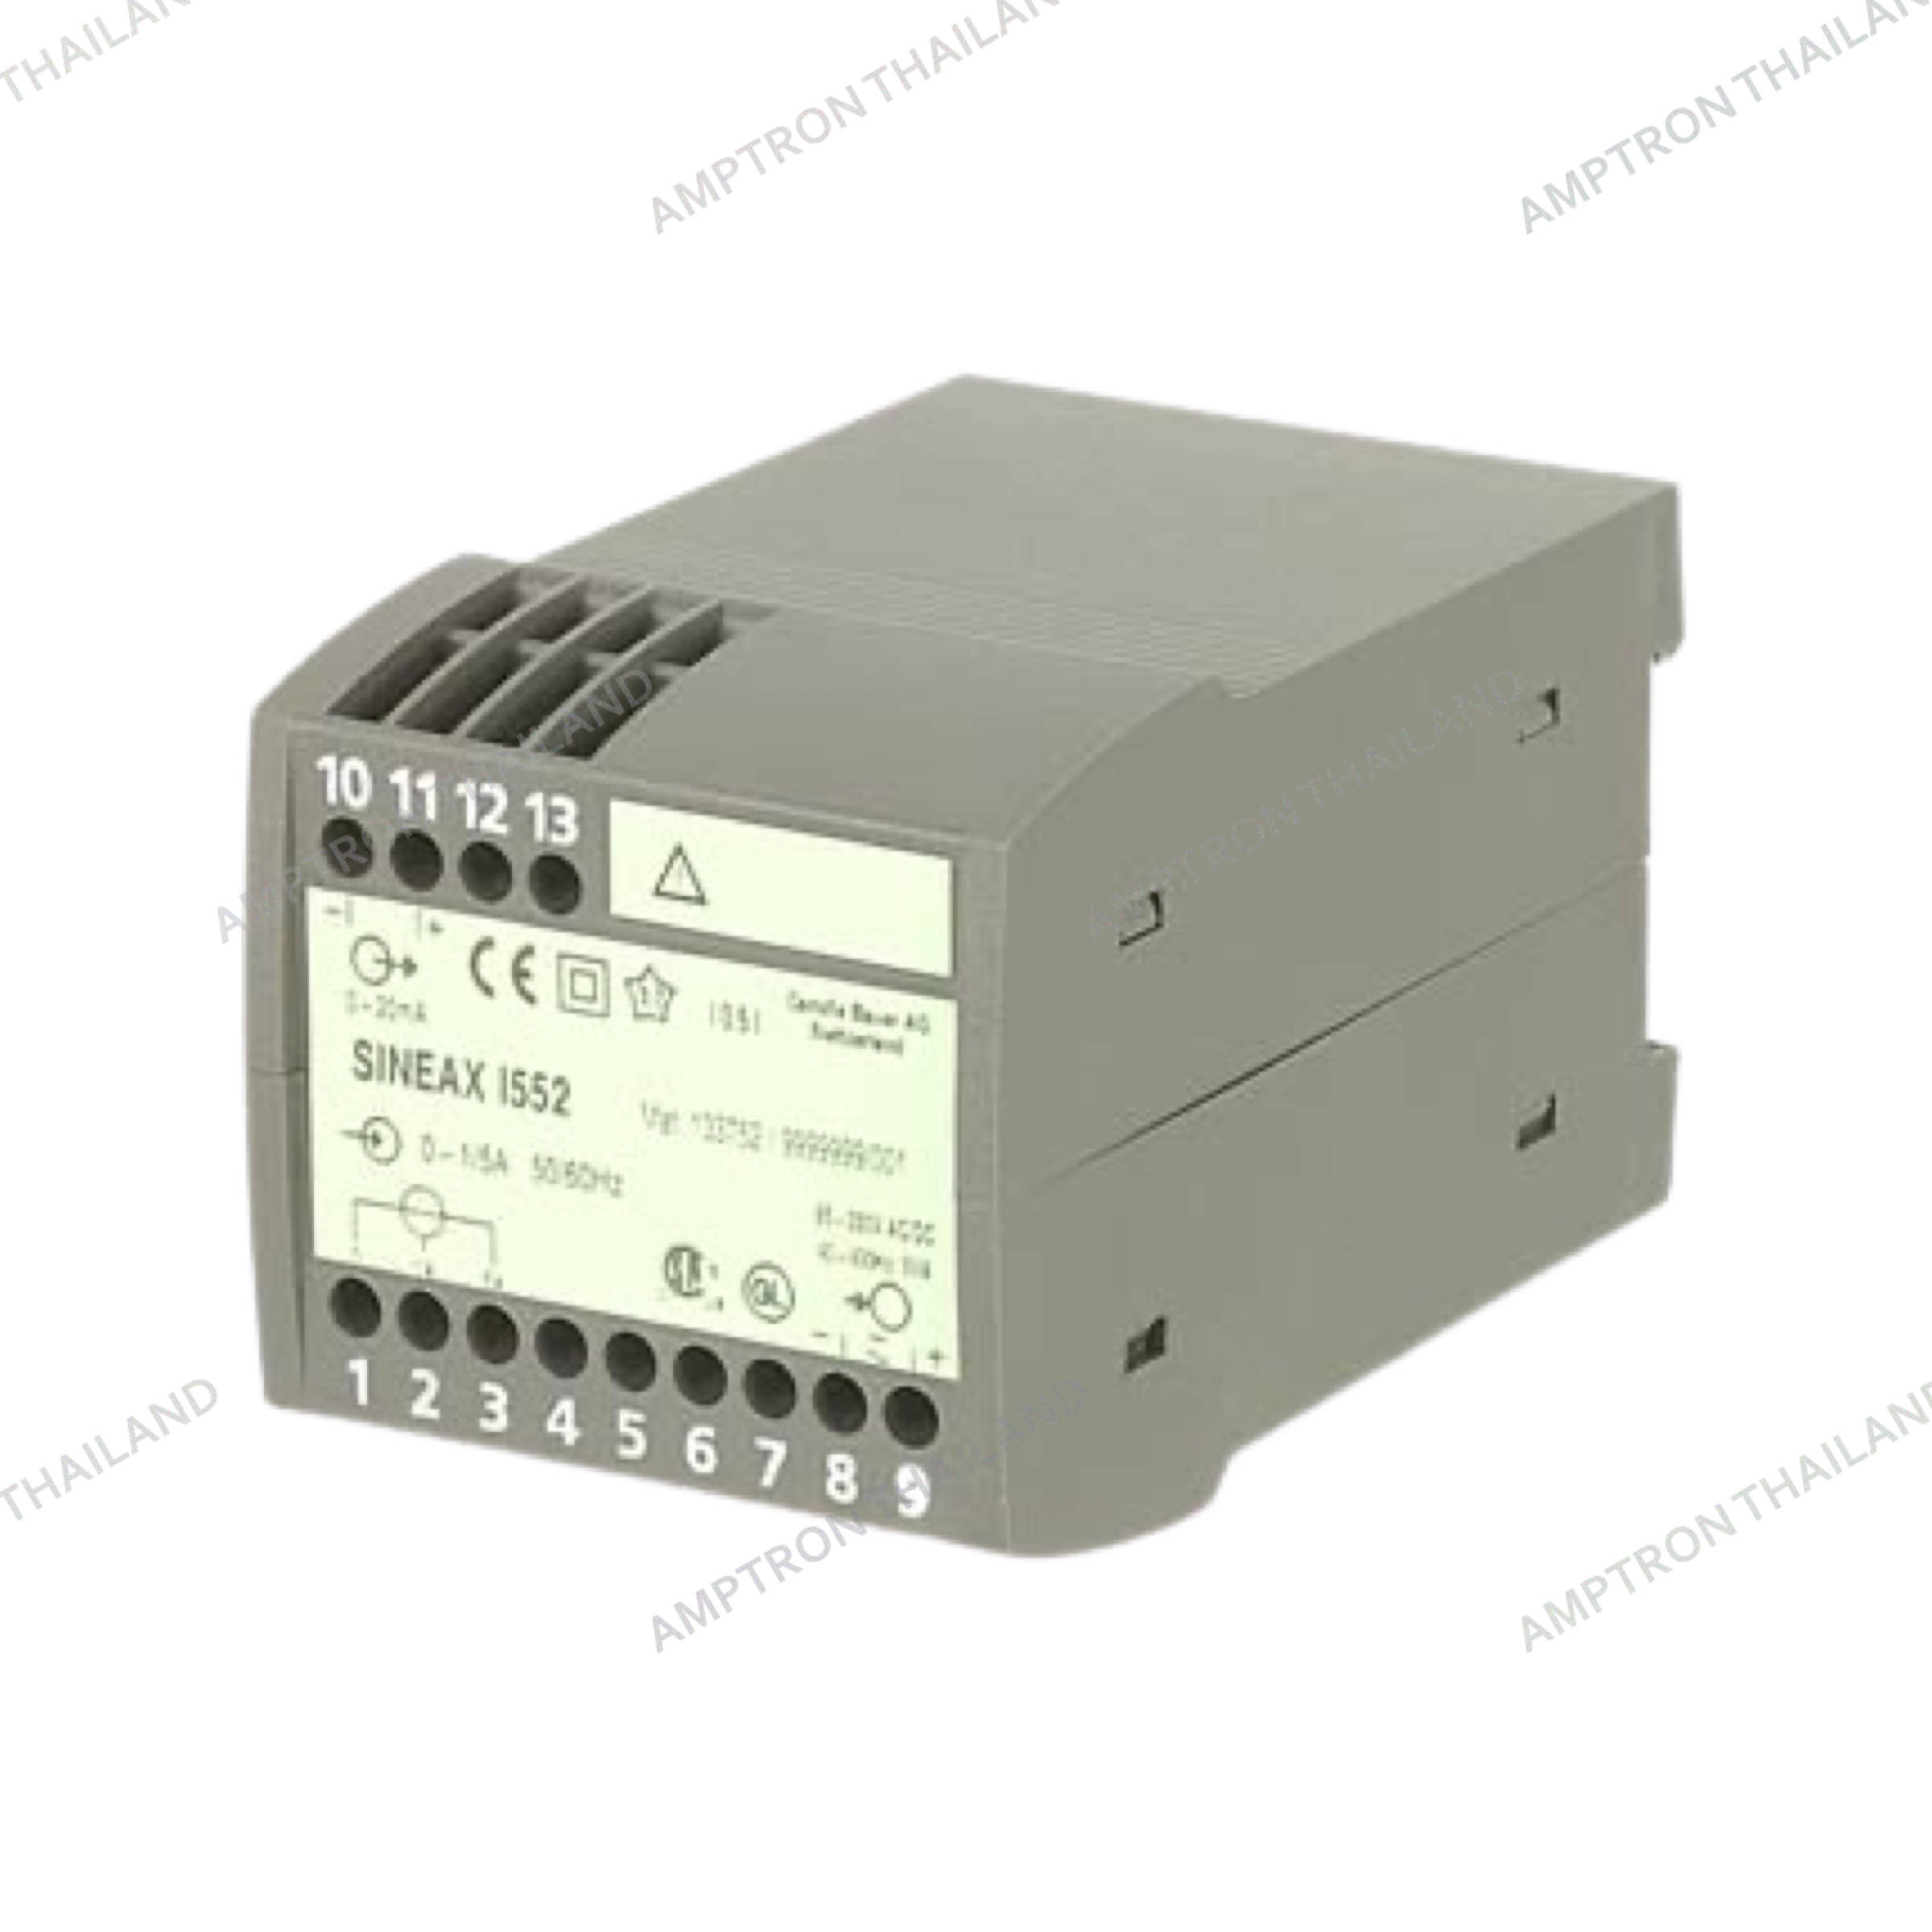 SINEAX I552 Series Transducer